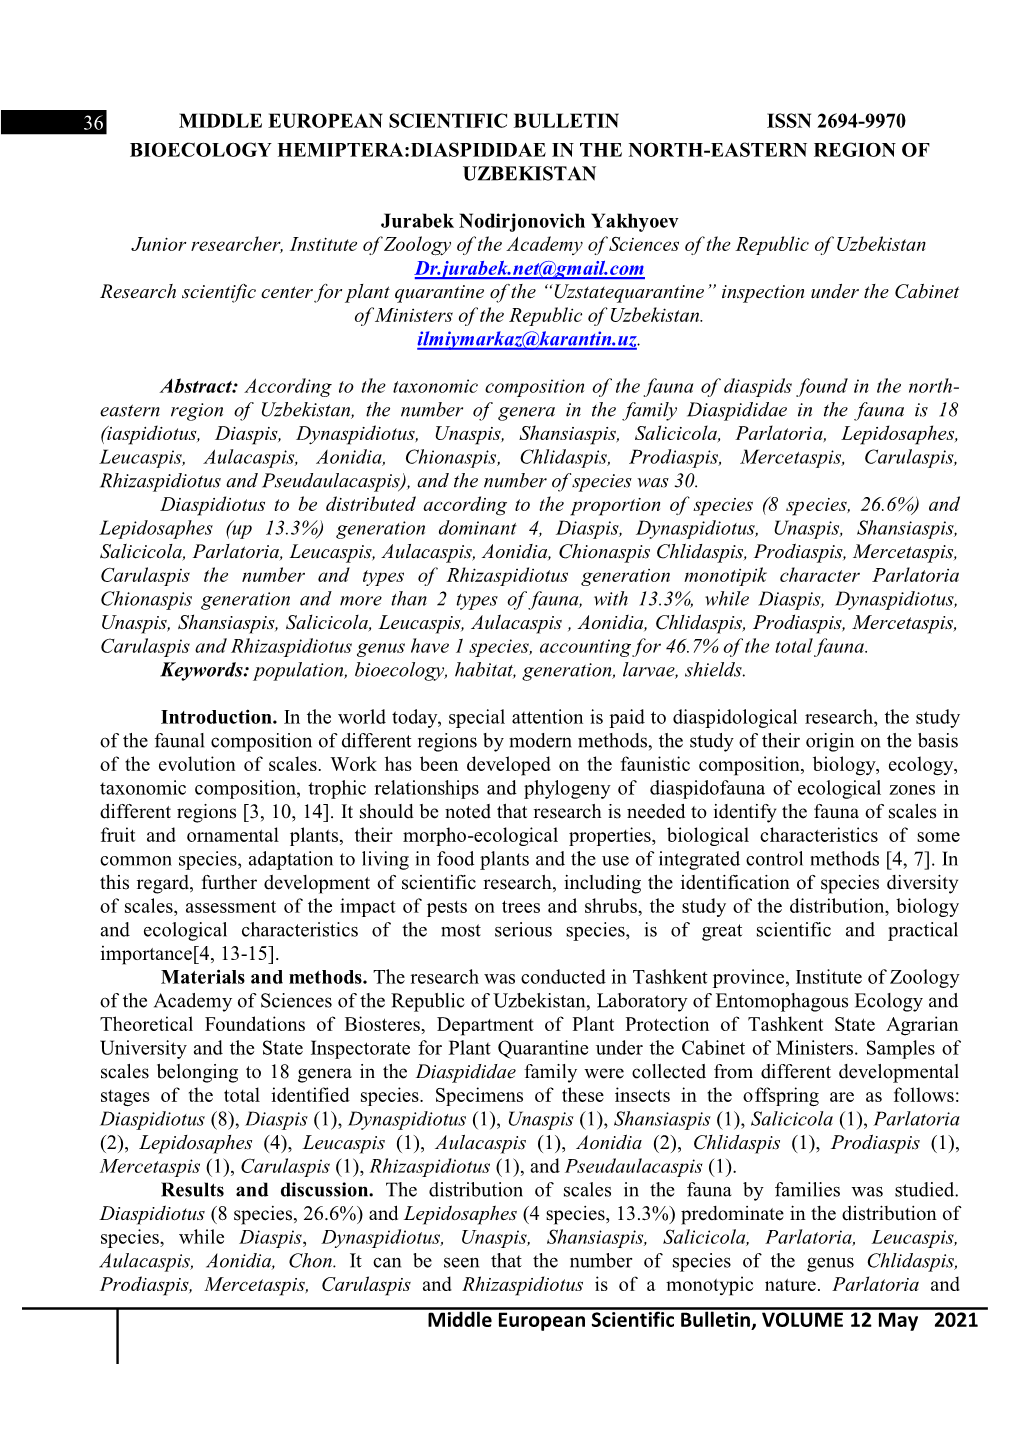 Middle European Scientific Bulletin Issn 2694-9970 Bioecology Hemiptera:Diaspididae in the North-Eastern Region of Uzbekistan